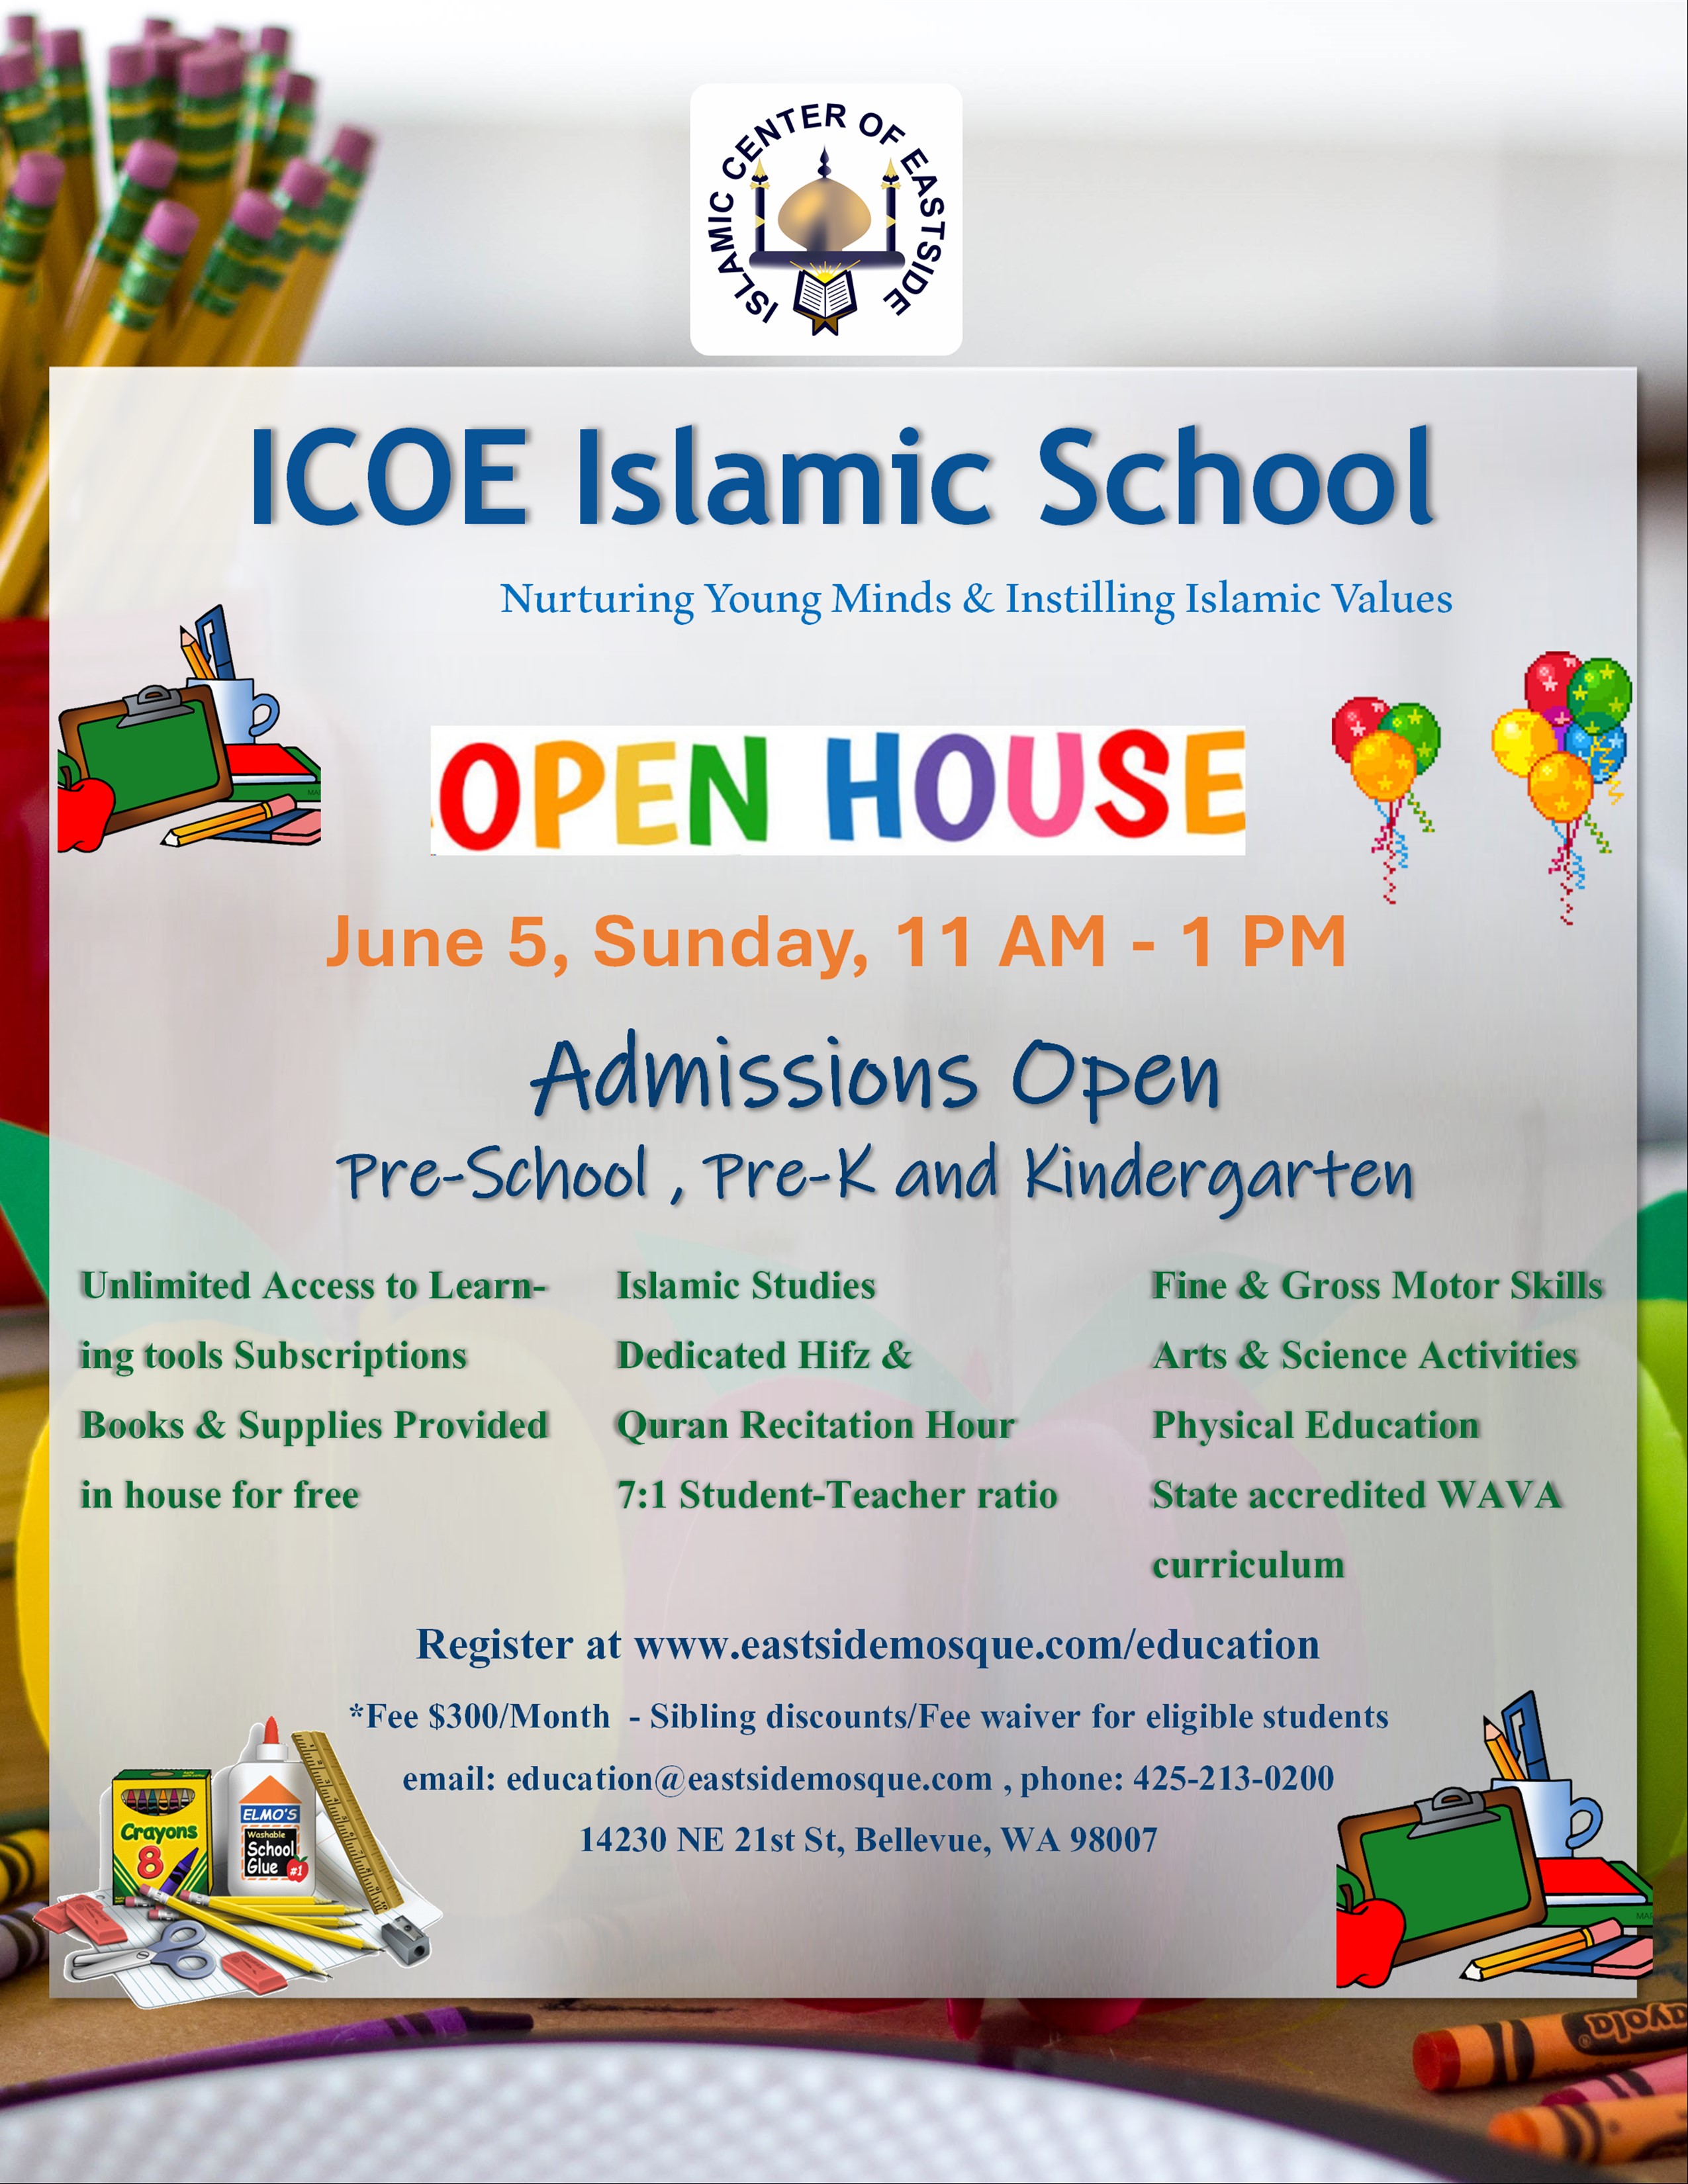 ICOE Islamic School - OPEN HOUSE